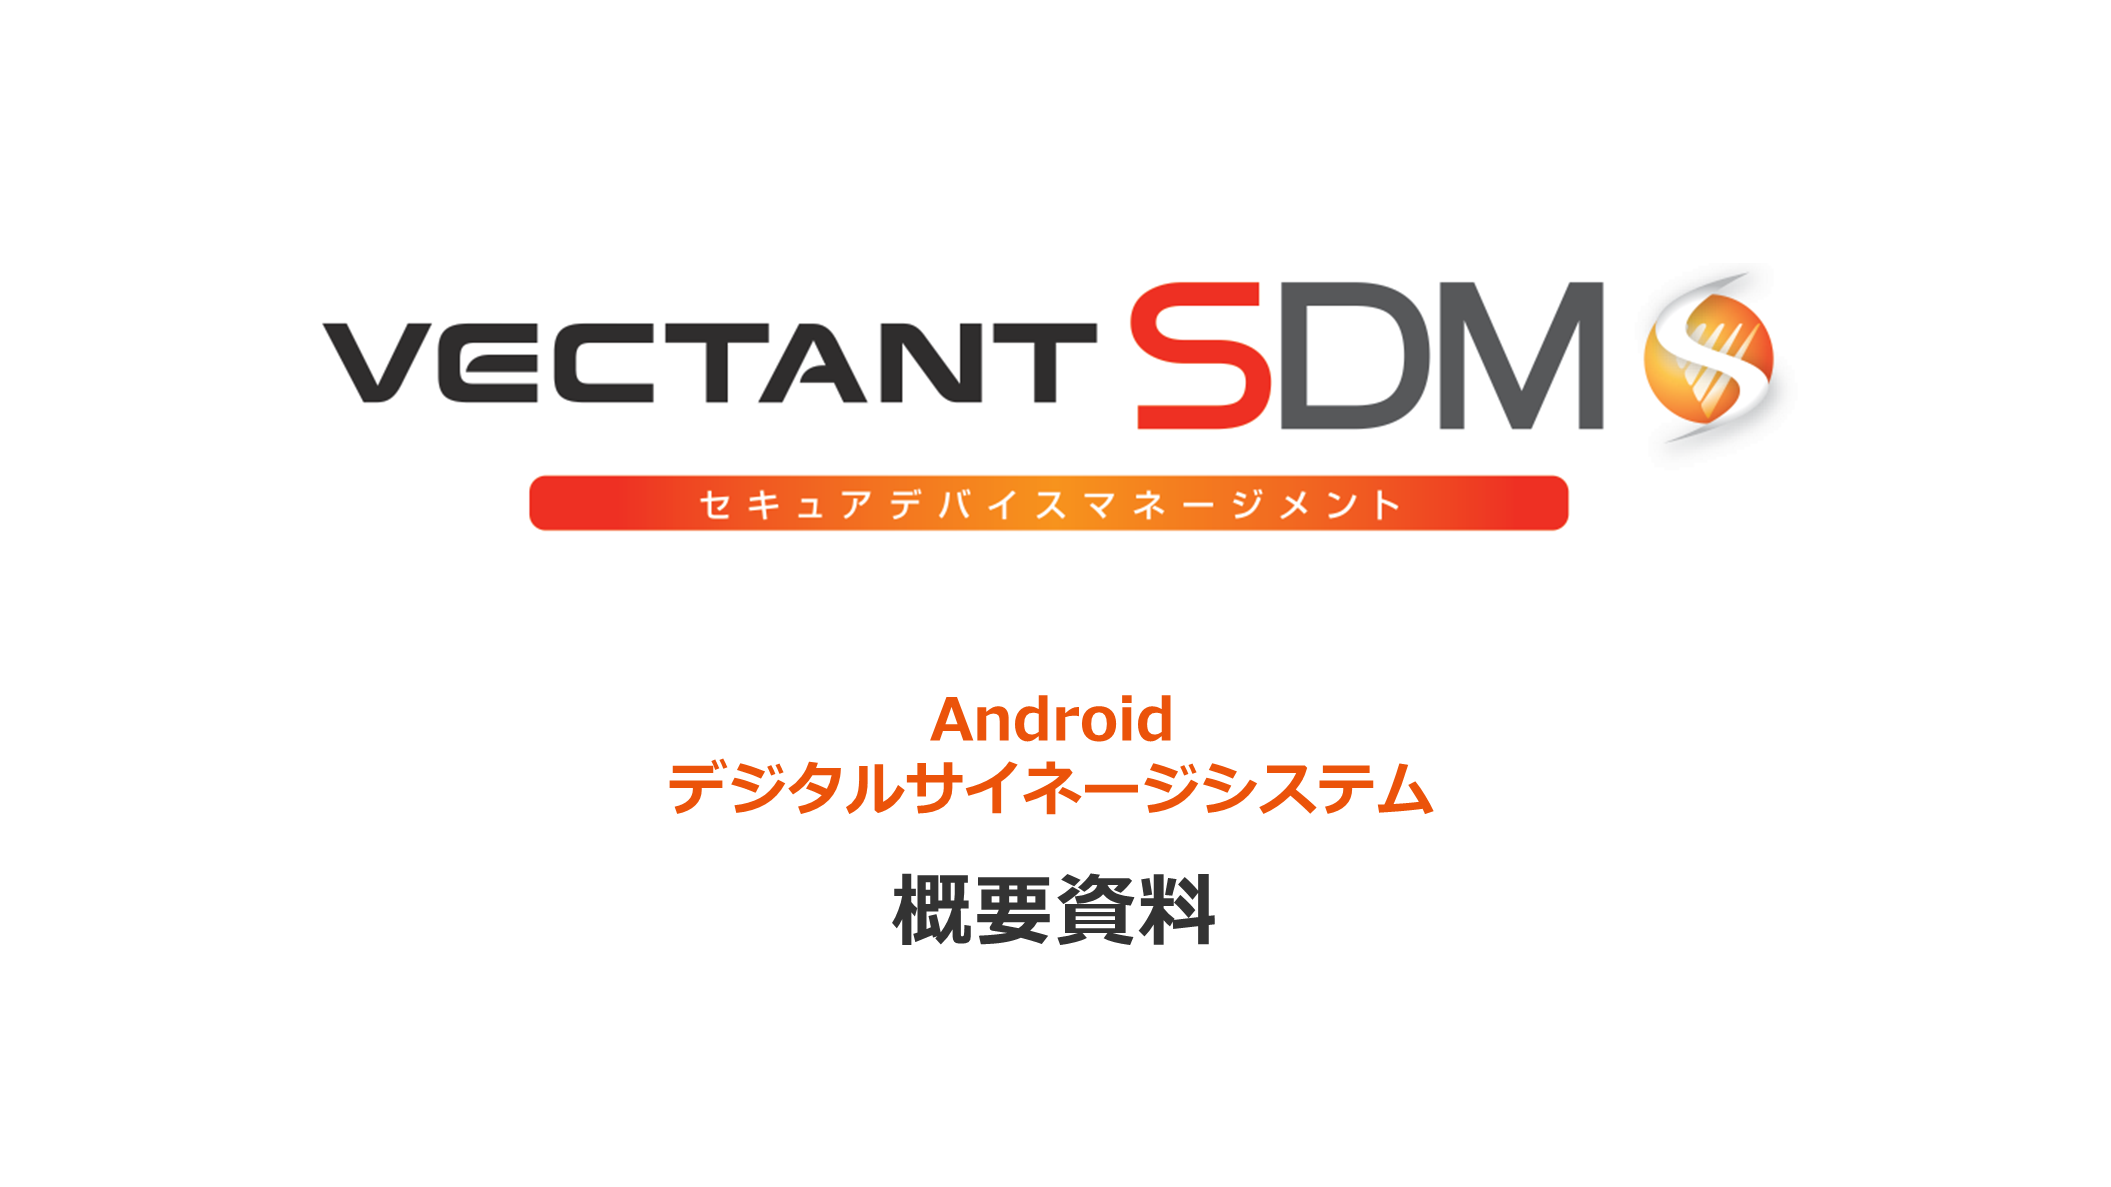 VECTANT SDM MDM概要資料